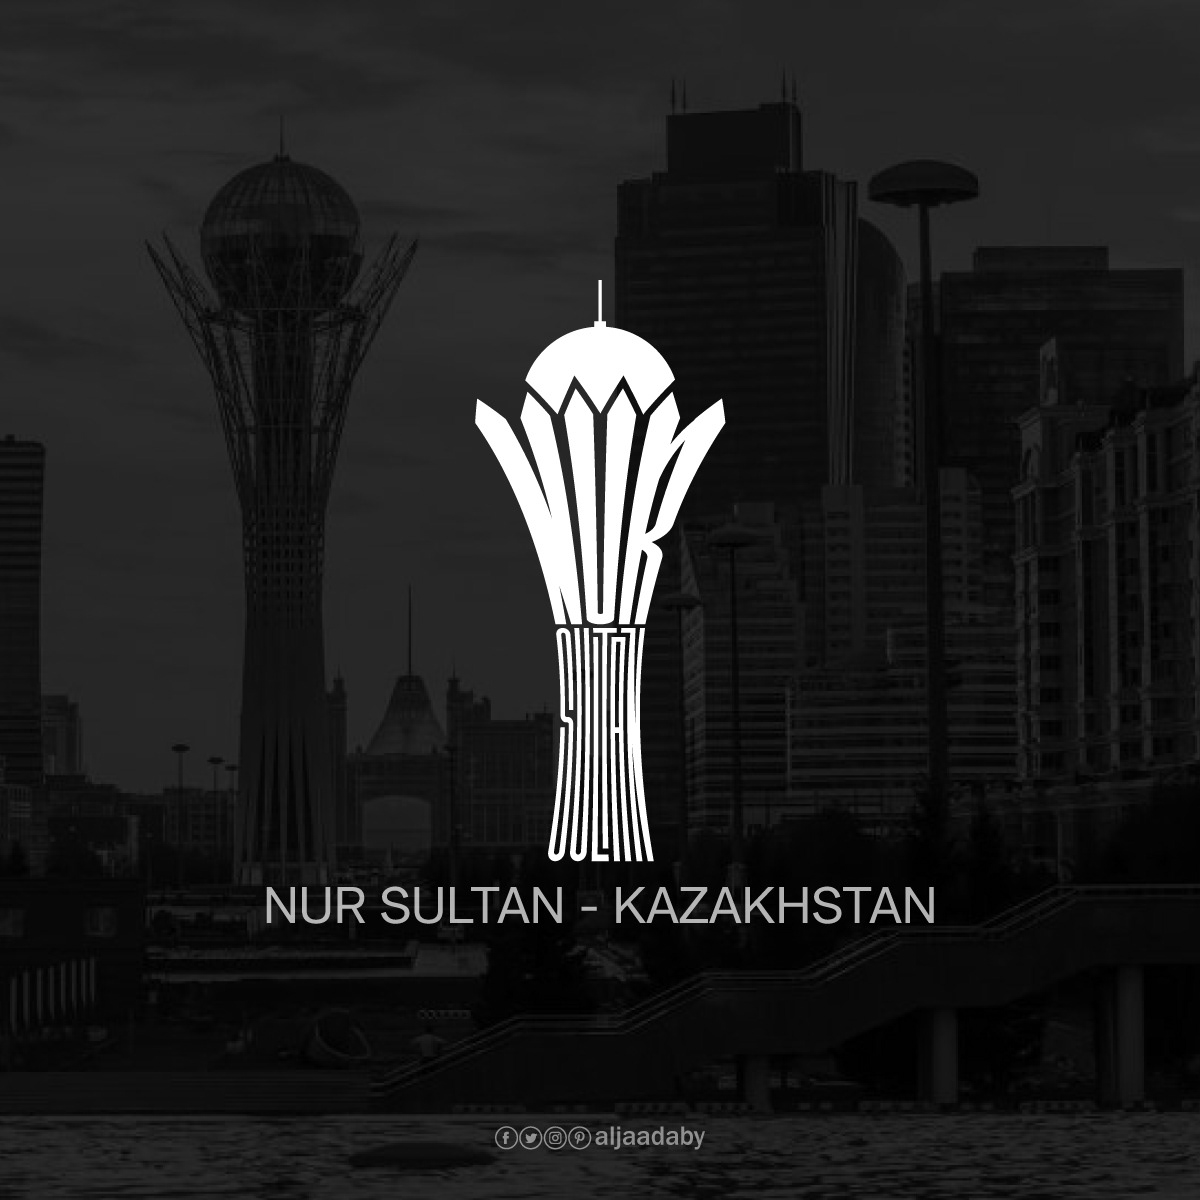 Typographic city logos based on their famous landmarks - Nur Sultan